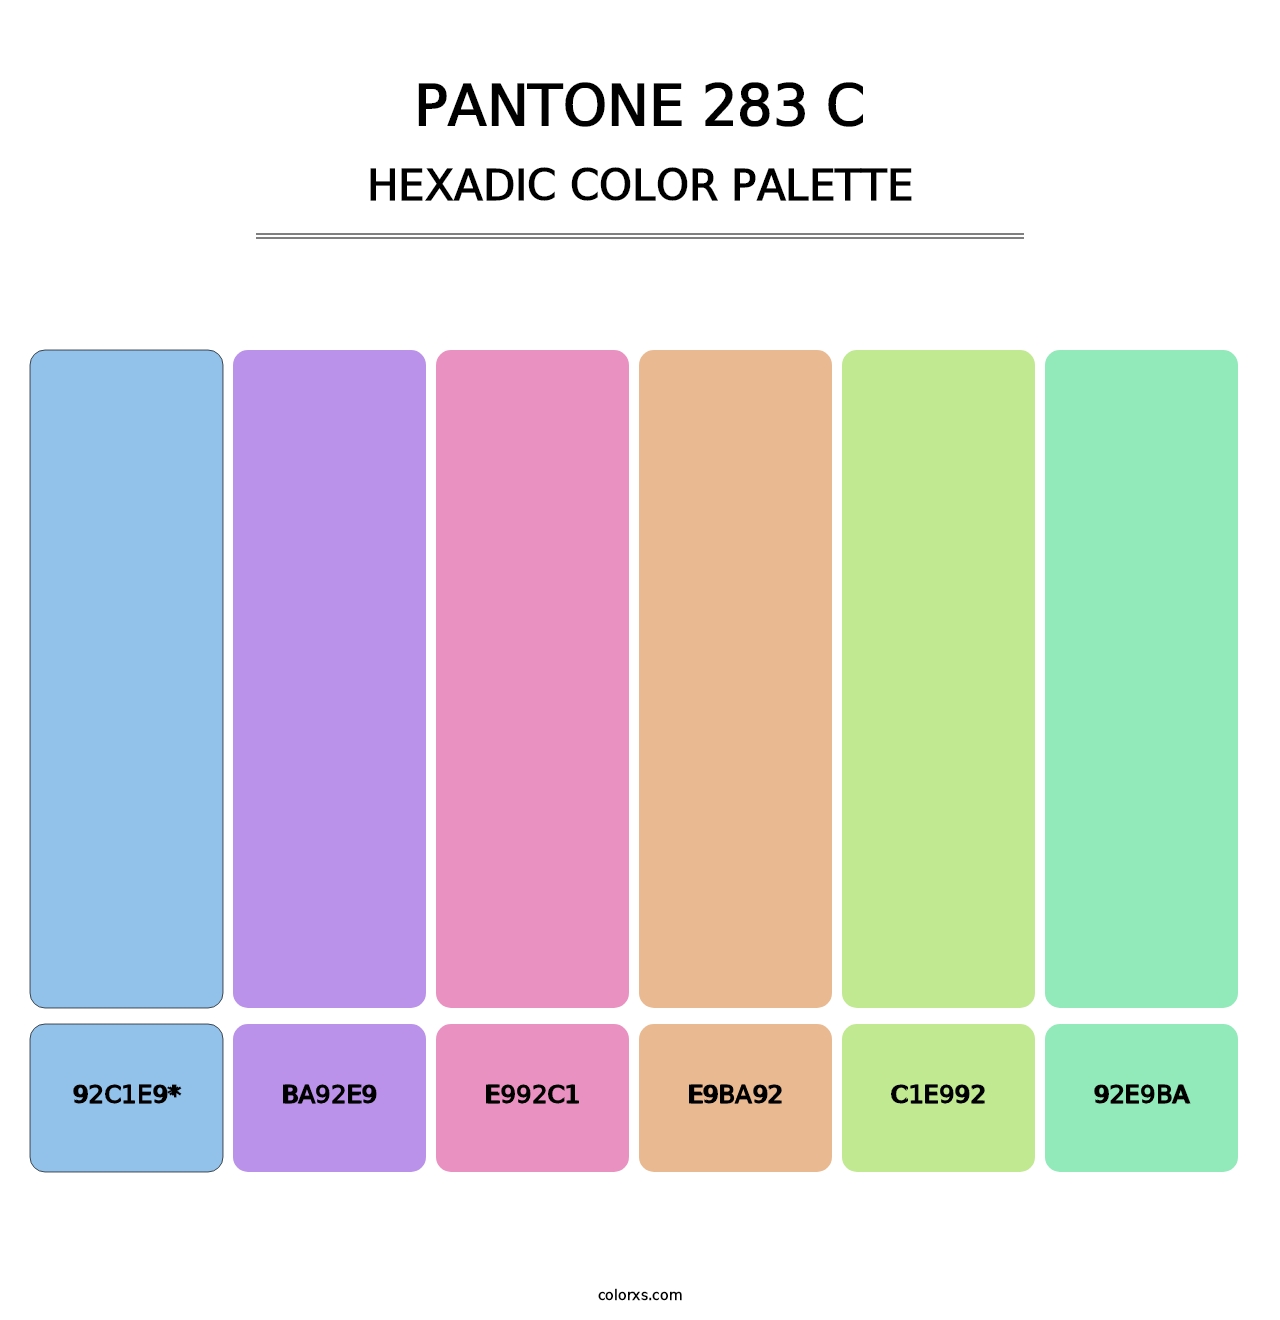 PANTONE 283 C - Hexadic Color Palette